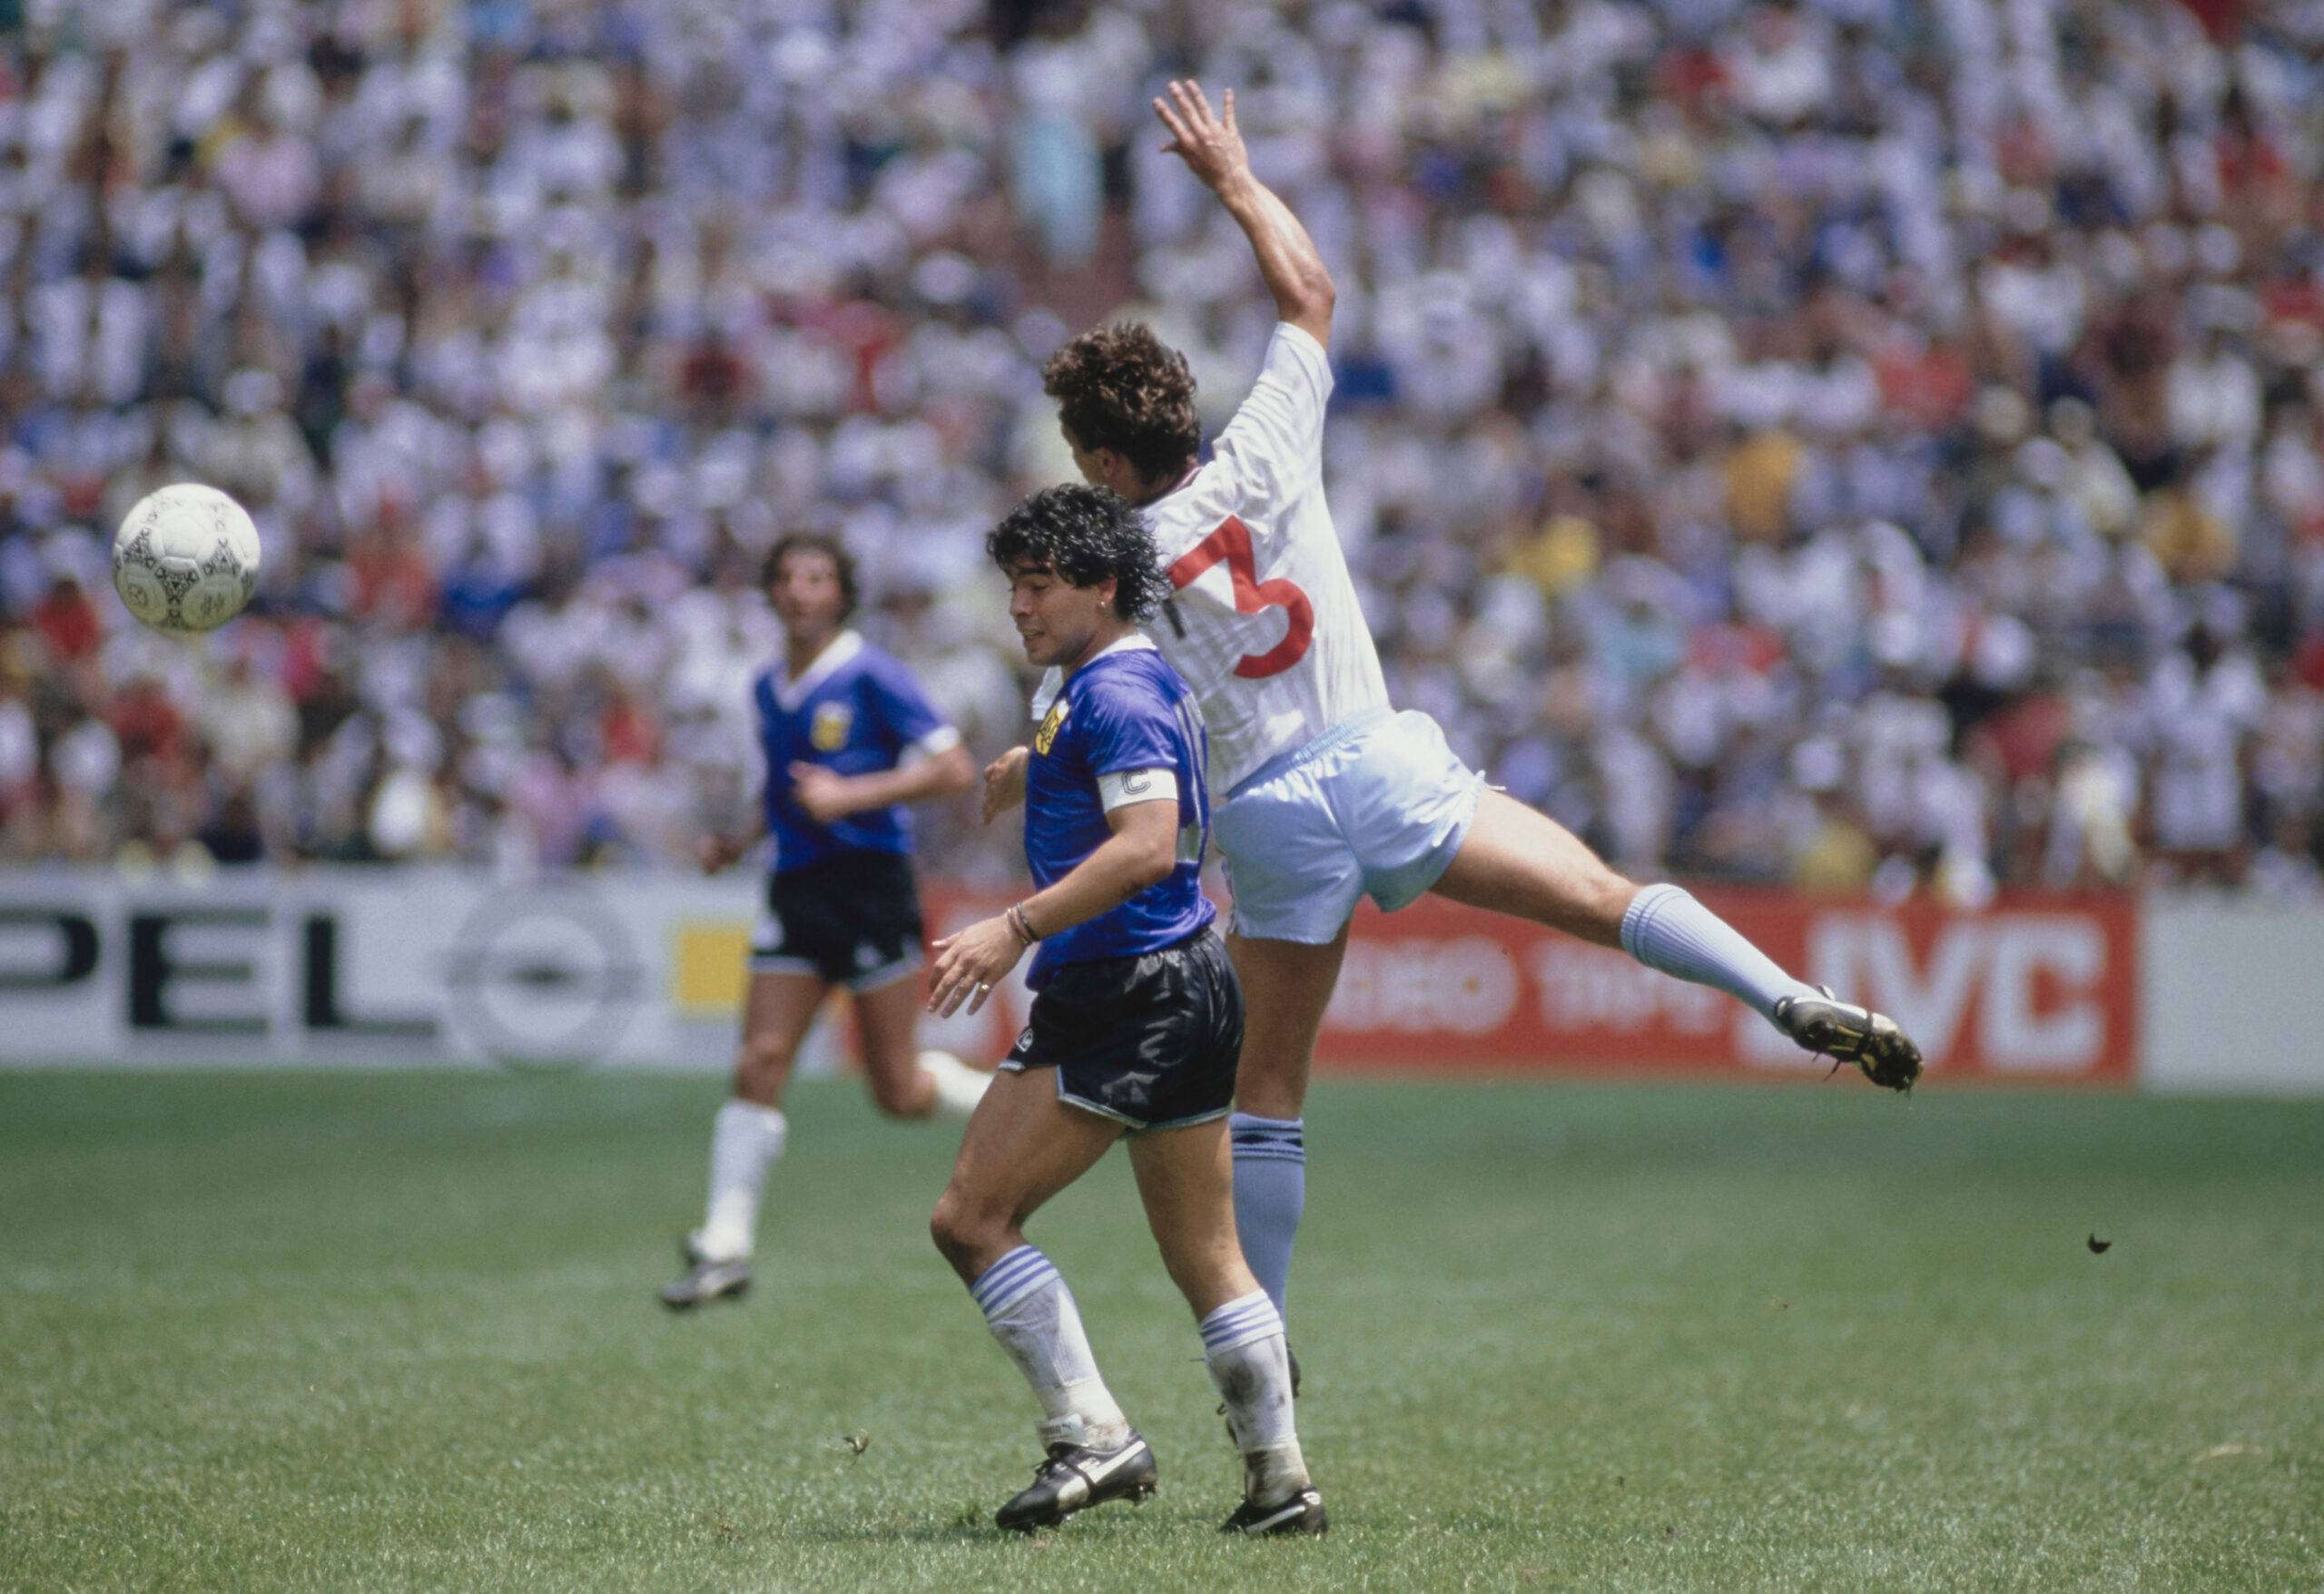 Argentina's Maradona competing with England.